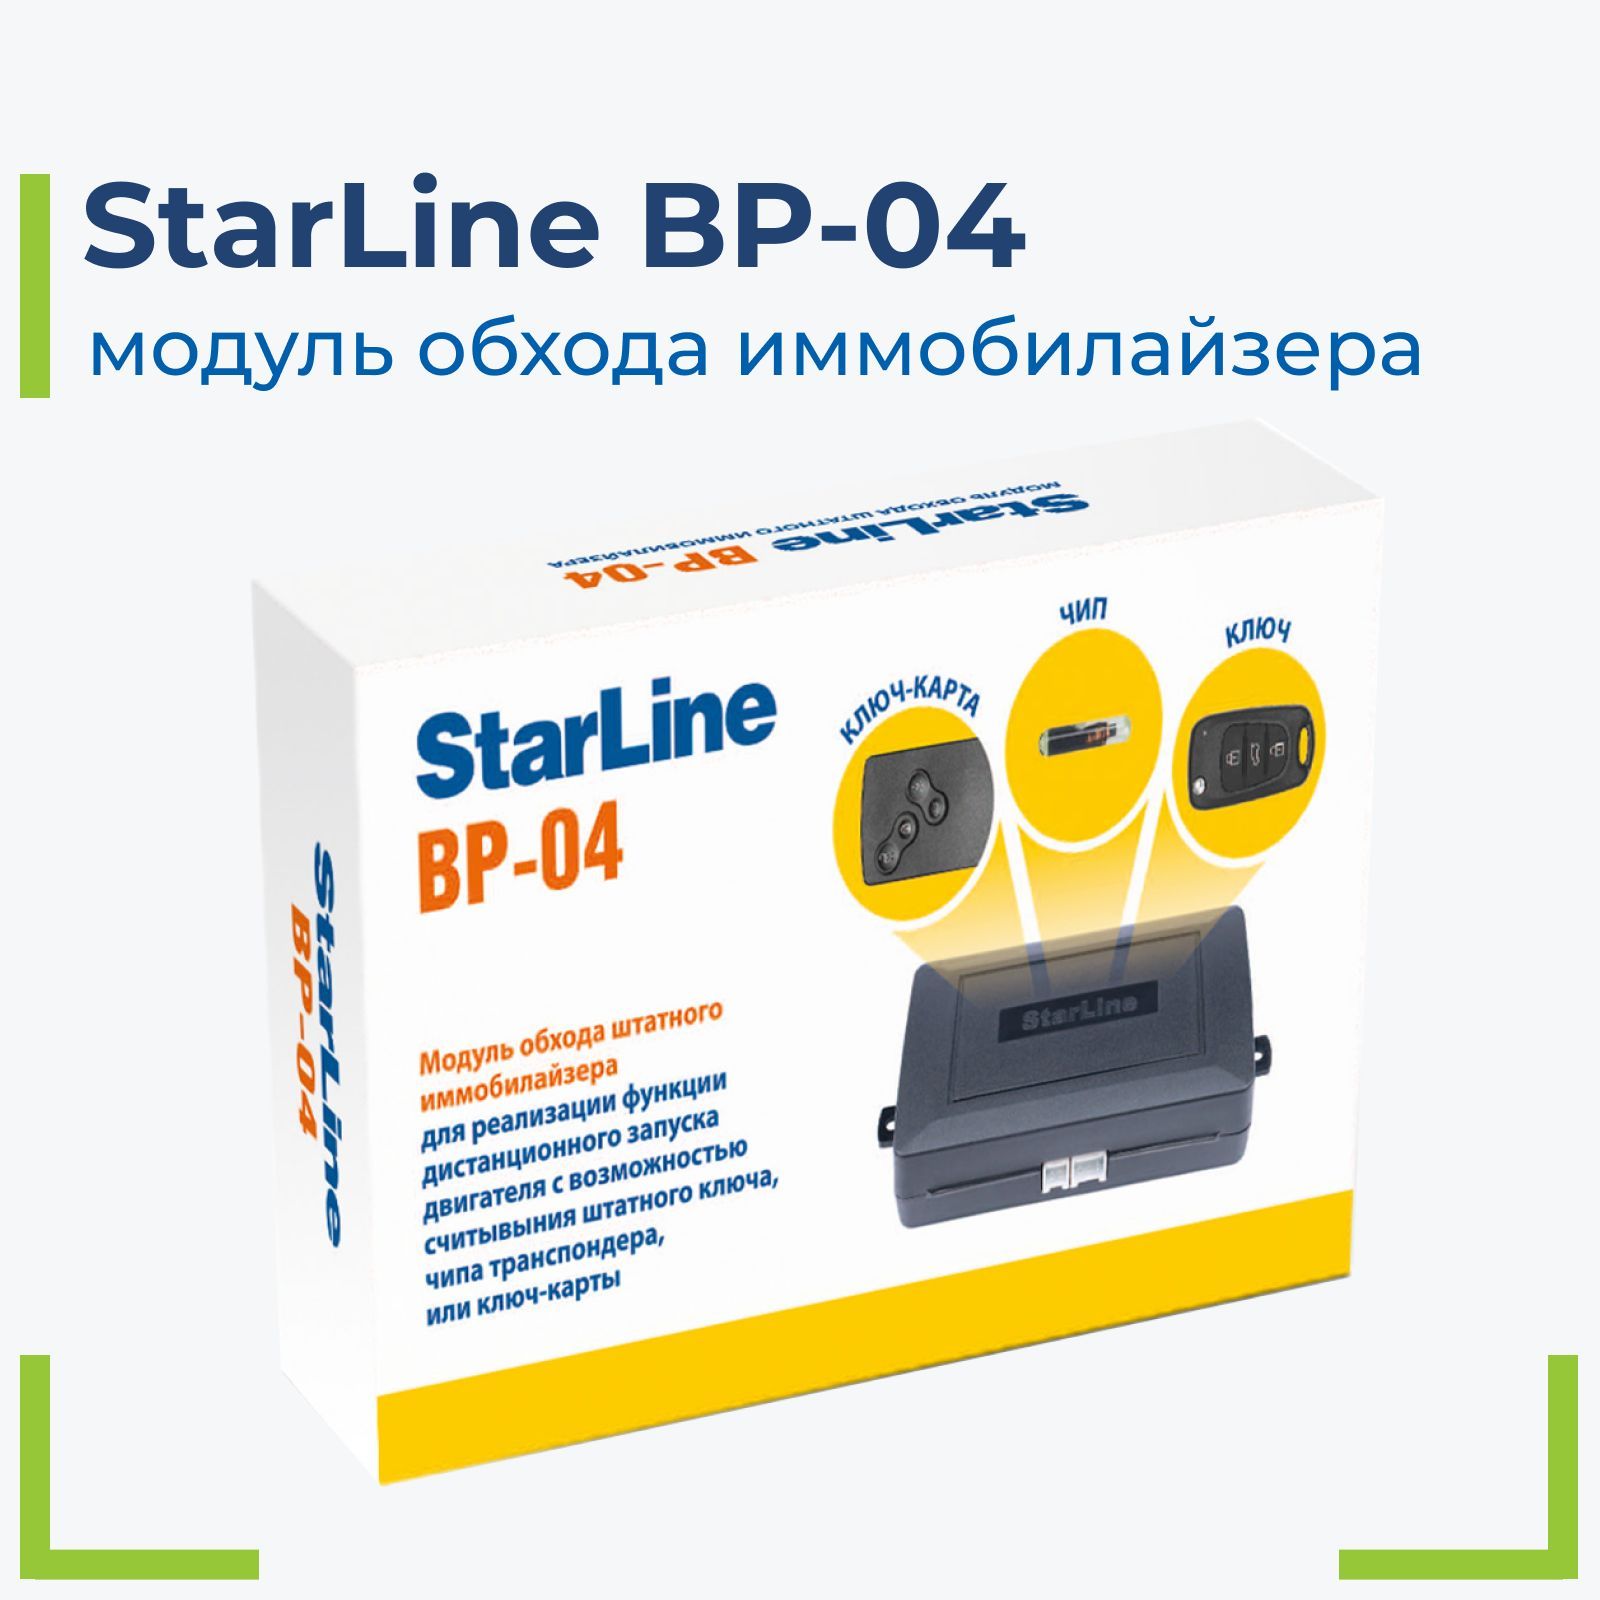 StarLineBP-04Модульобходаиммобилайзера